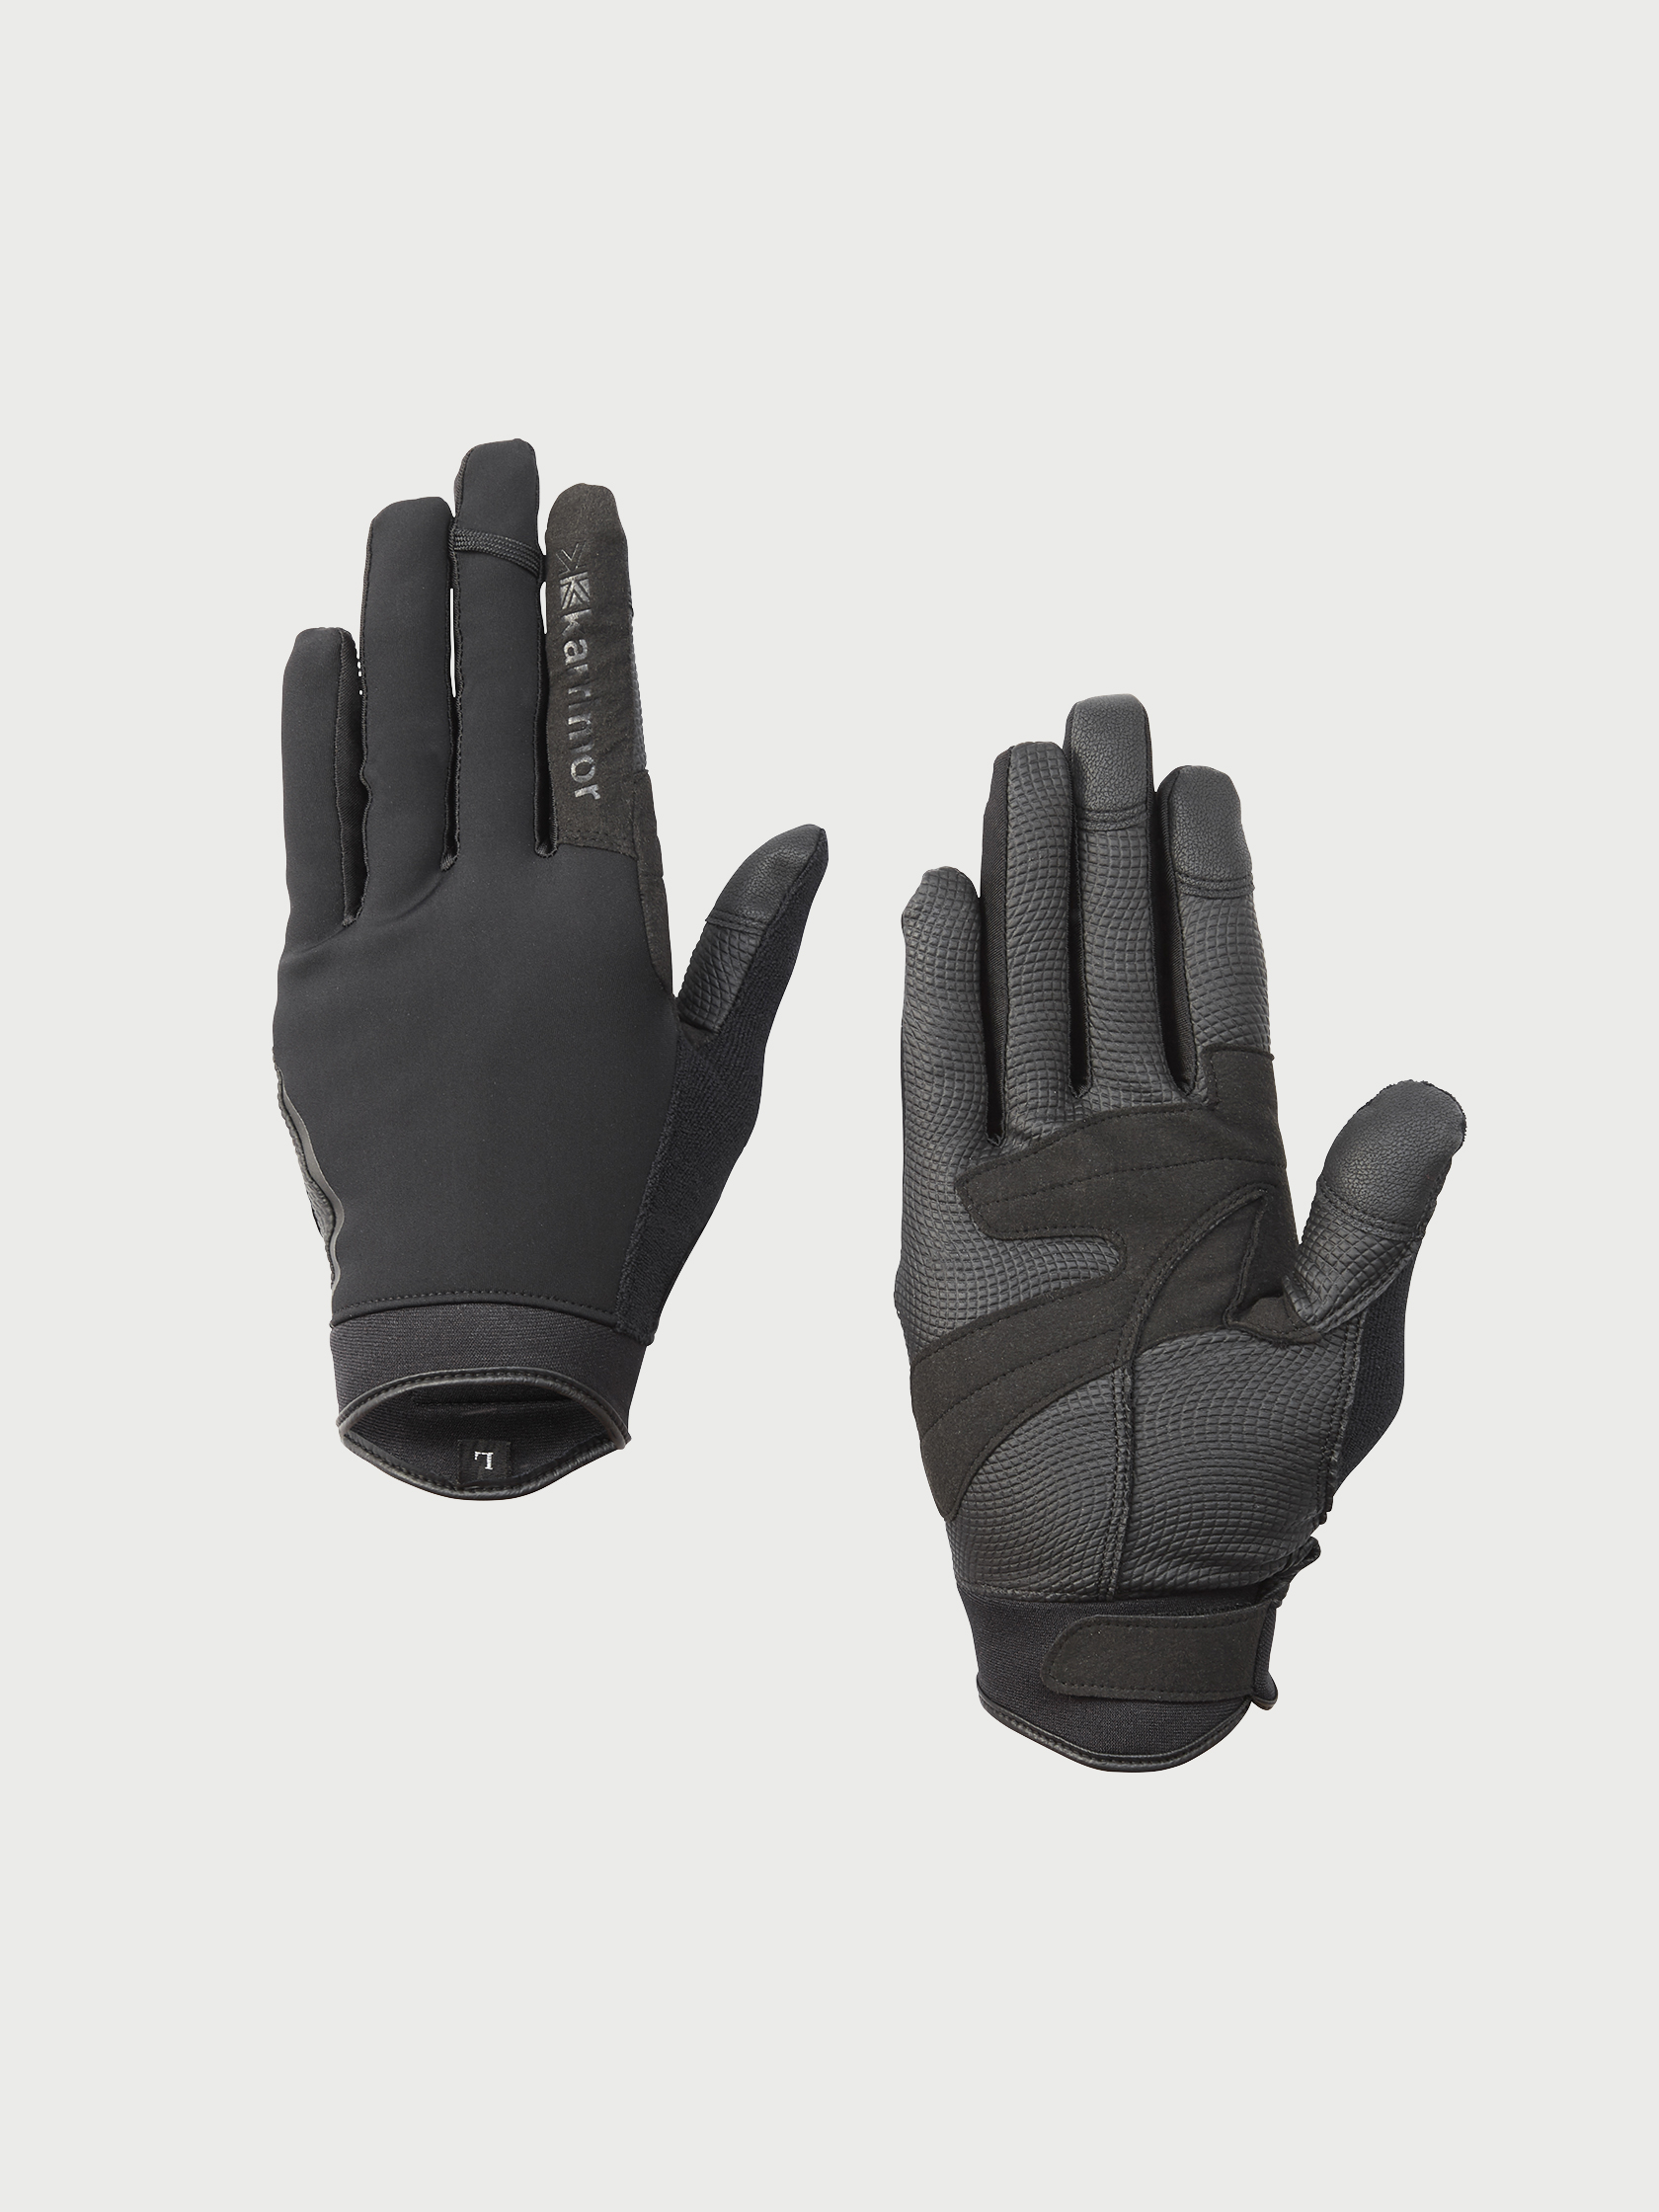 technical softshell glove | karrimor カリマー | リュックサック 